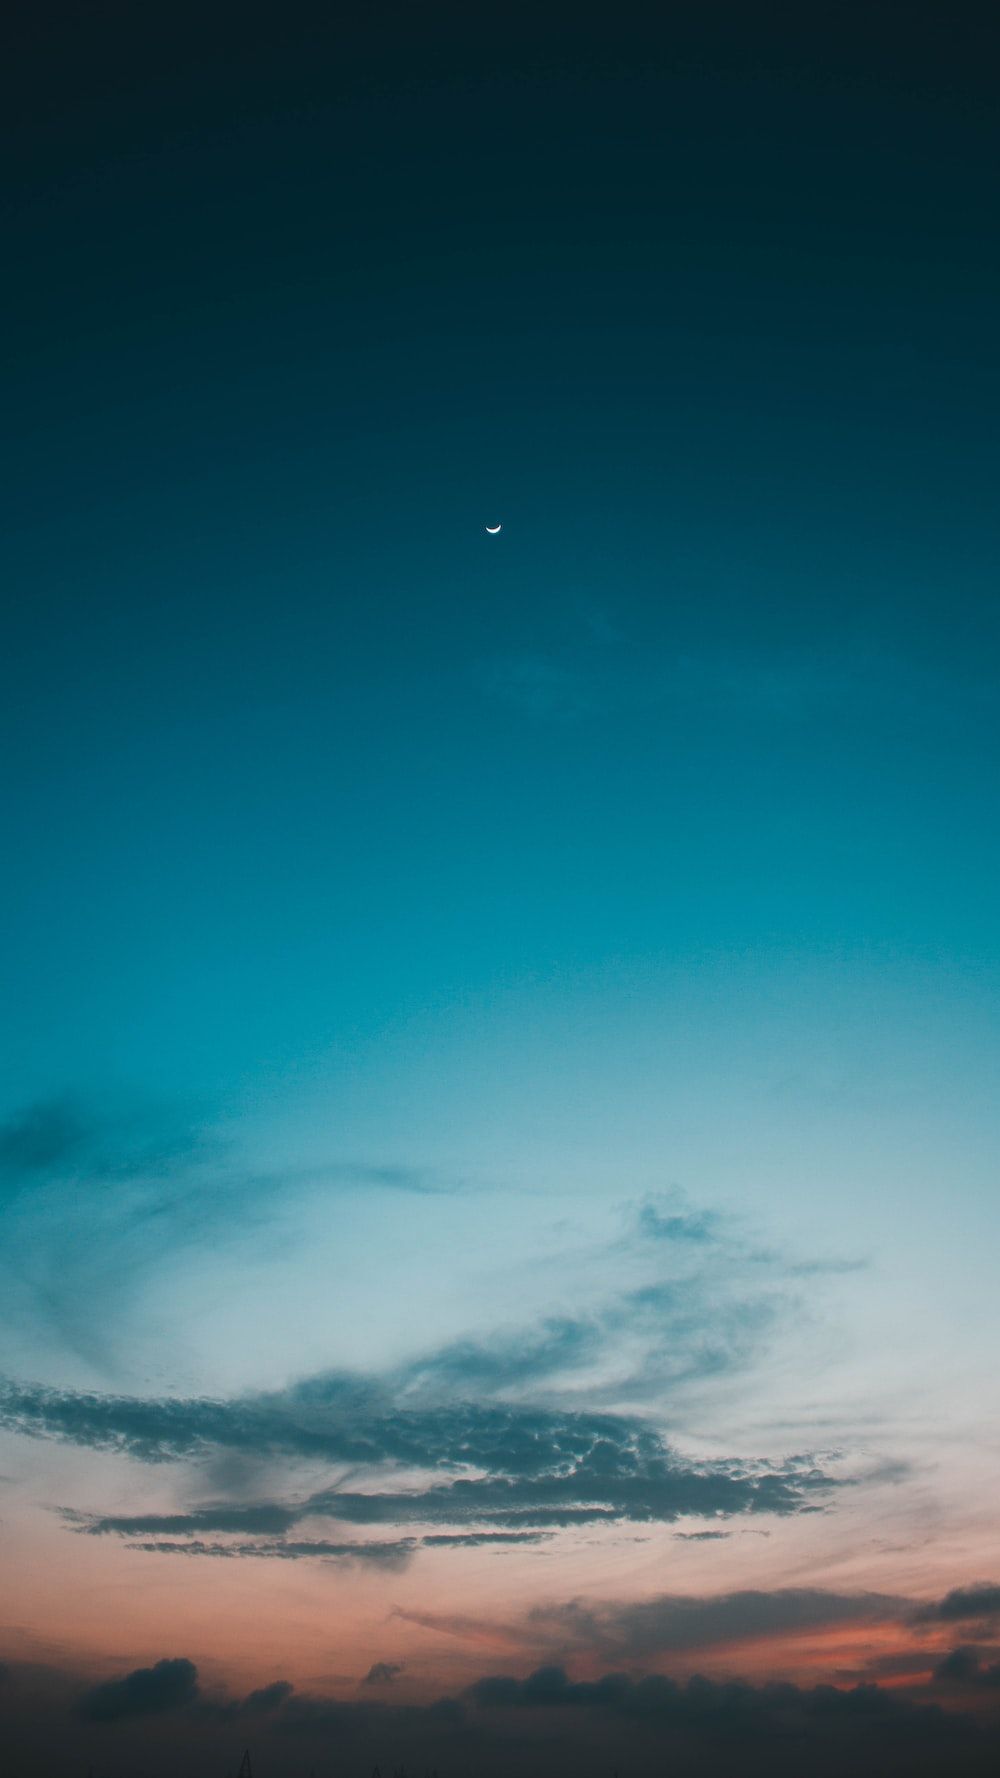  Sonnenaufgang Hintergrundbild 1000x1778. Aesthetic Sky Picture. Download Free Image